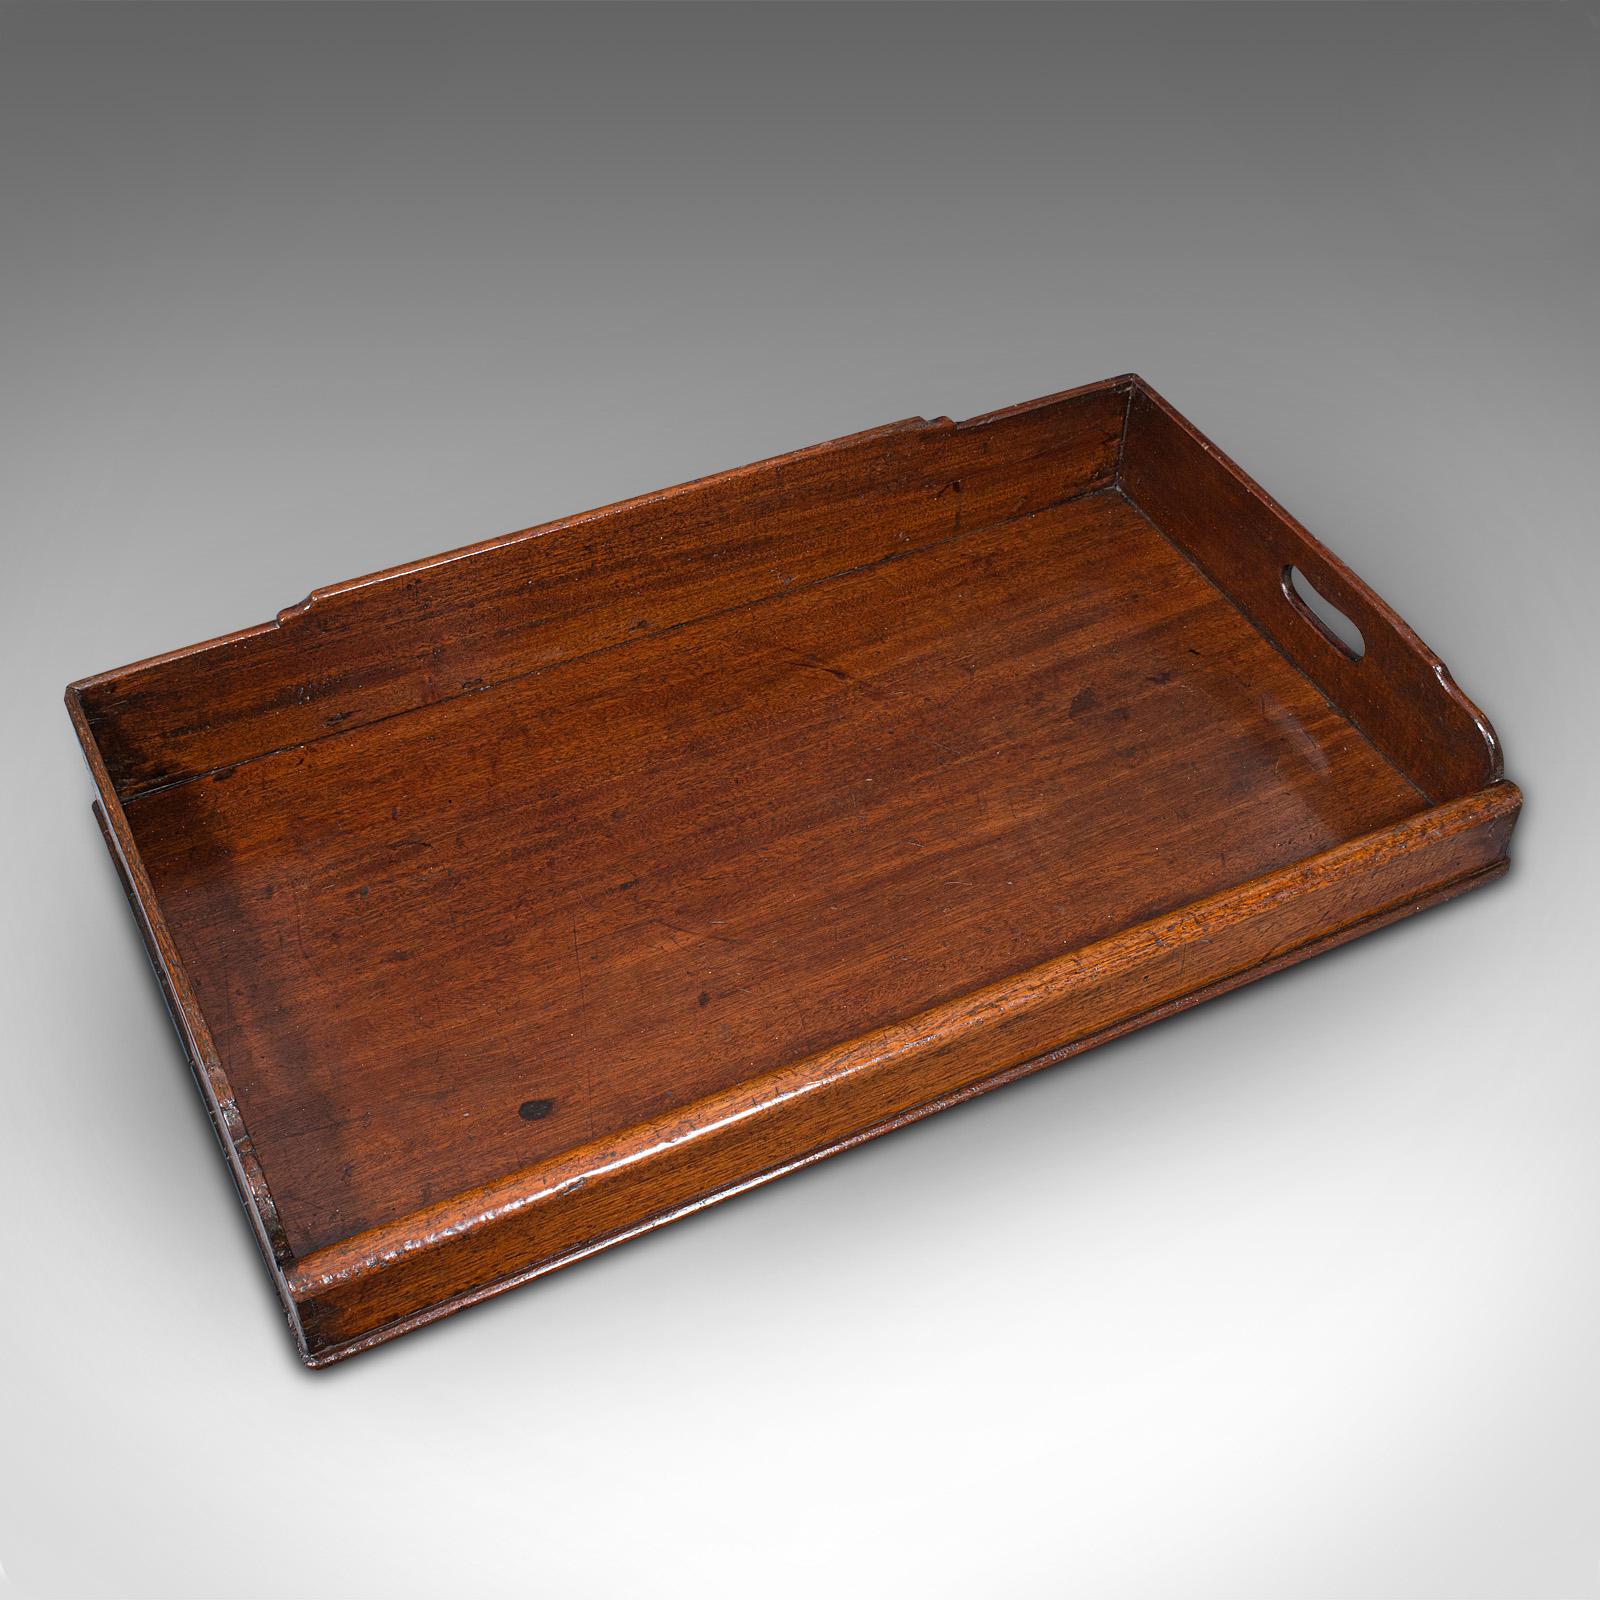 Wood Large Antique Butler's Tray, English, Tea Service Tray, Georgian, circa 1800